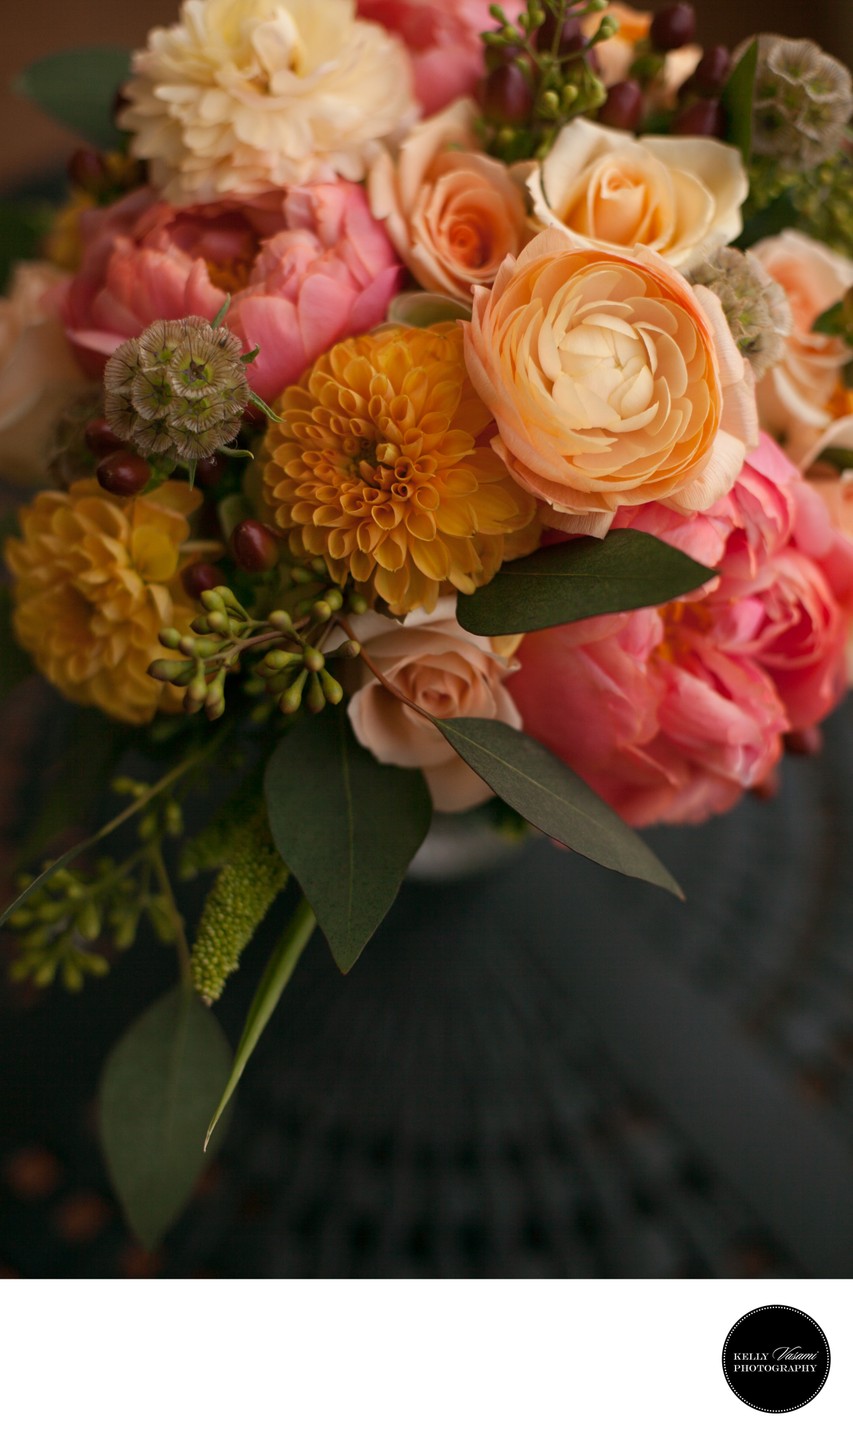 wedding florist westchester orange flowers ranunculus